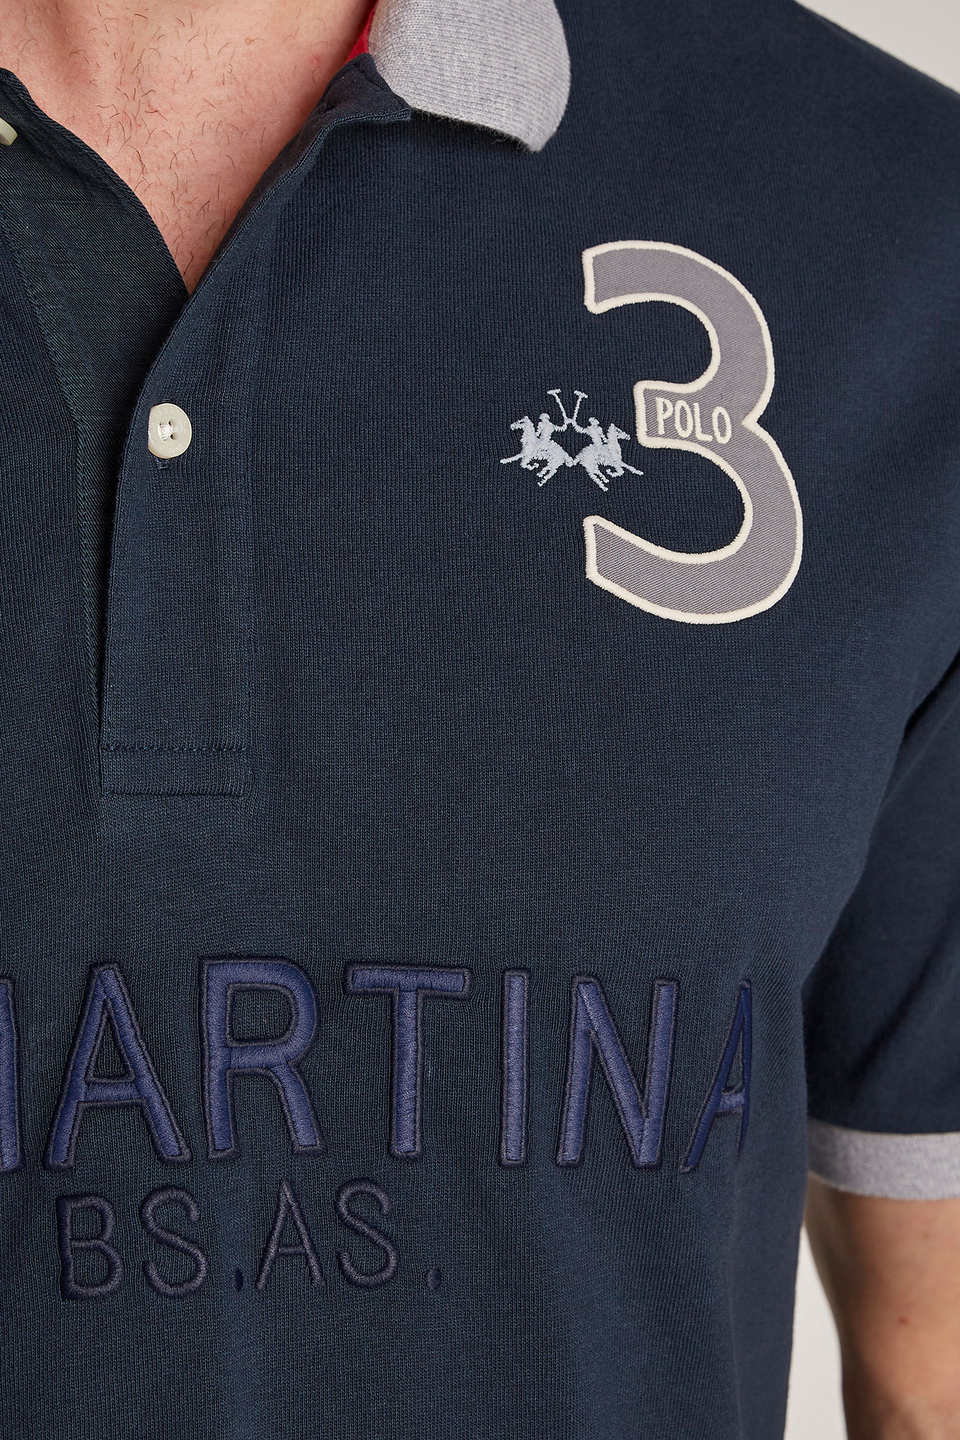 Men's oversized plain-coloured short-sleeved polo shirt - La Martina - Official Online Shop